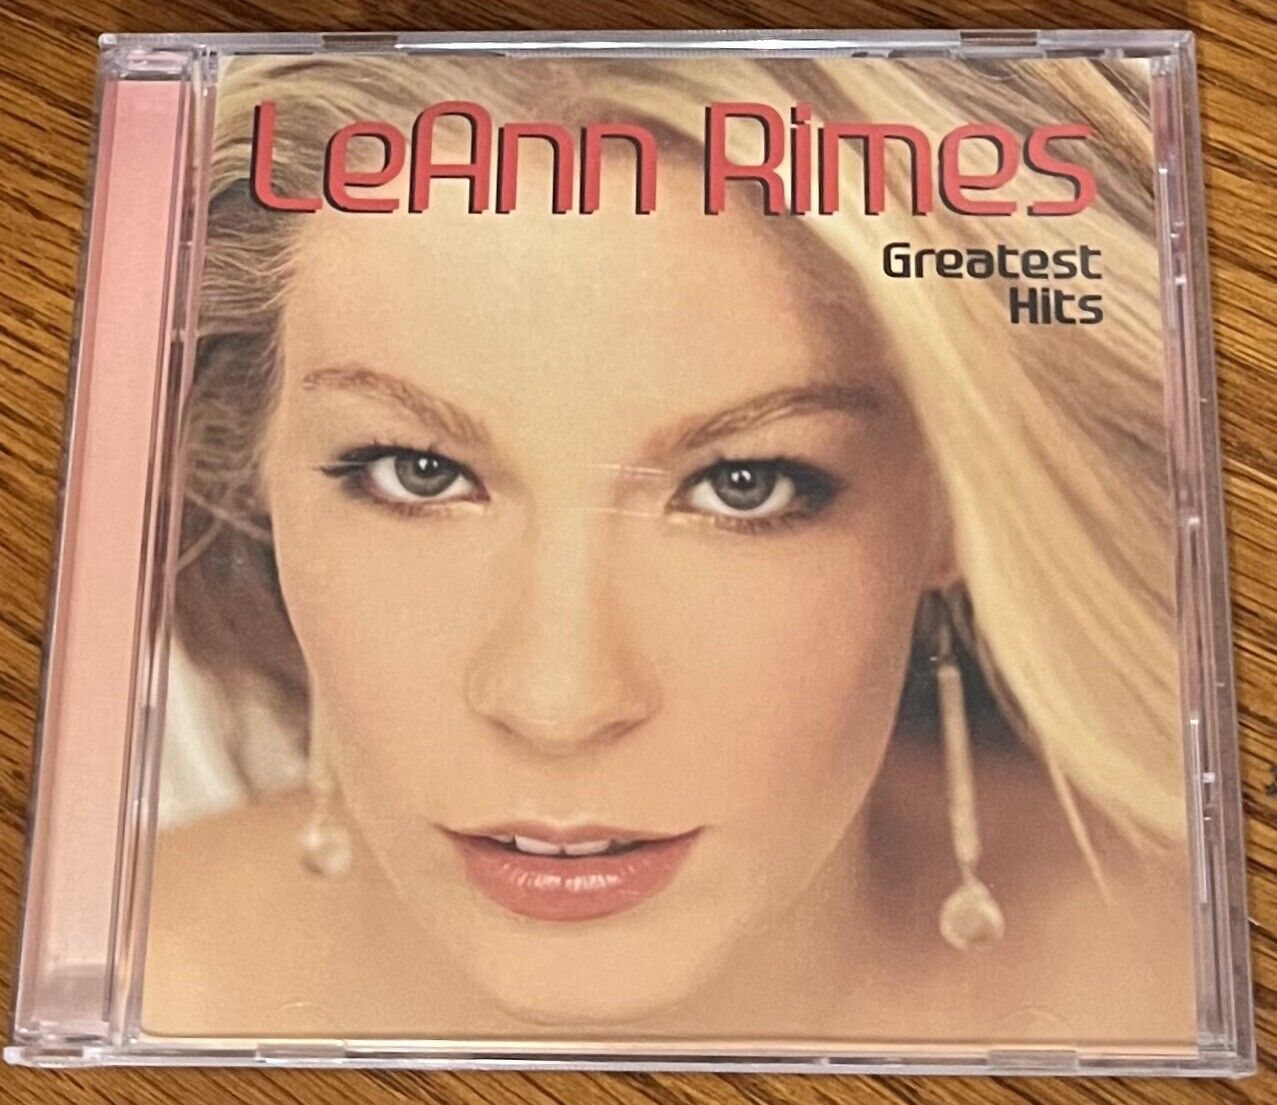 LEANN RIMES "GREATEST HITS" RARE ORIGINAL 2003 USA CD/DVD ALBUM